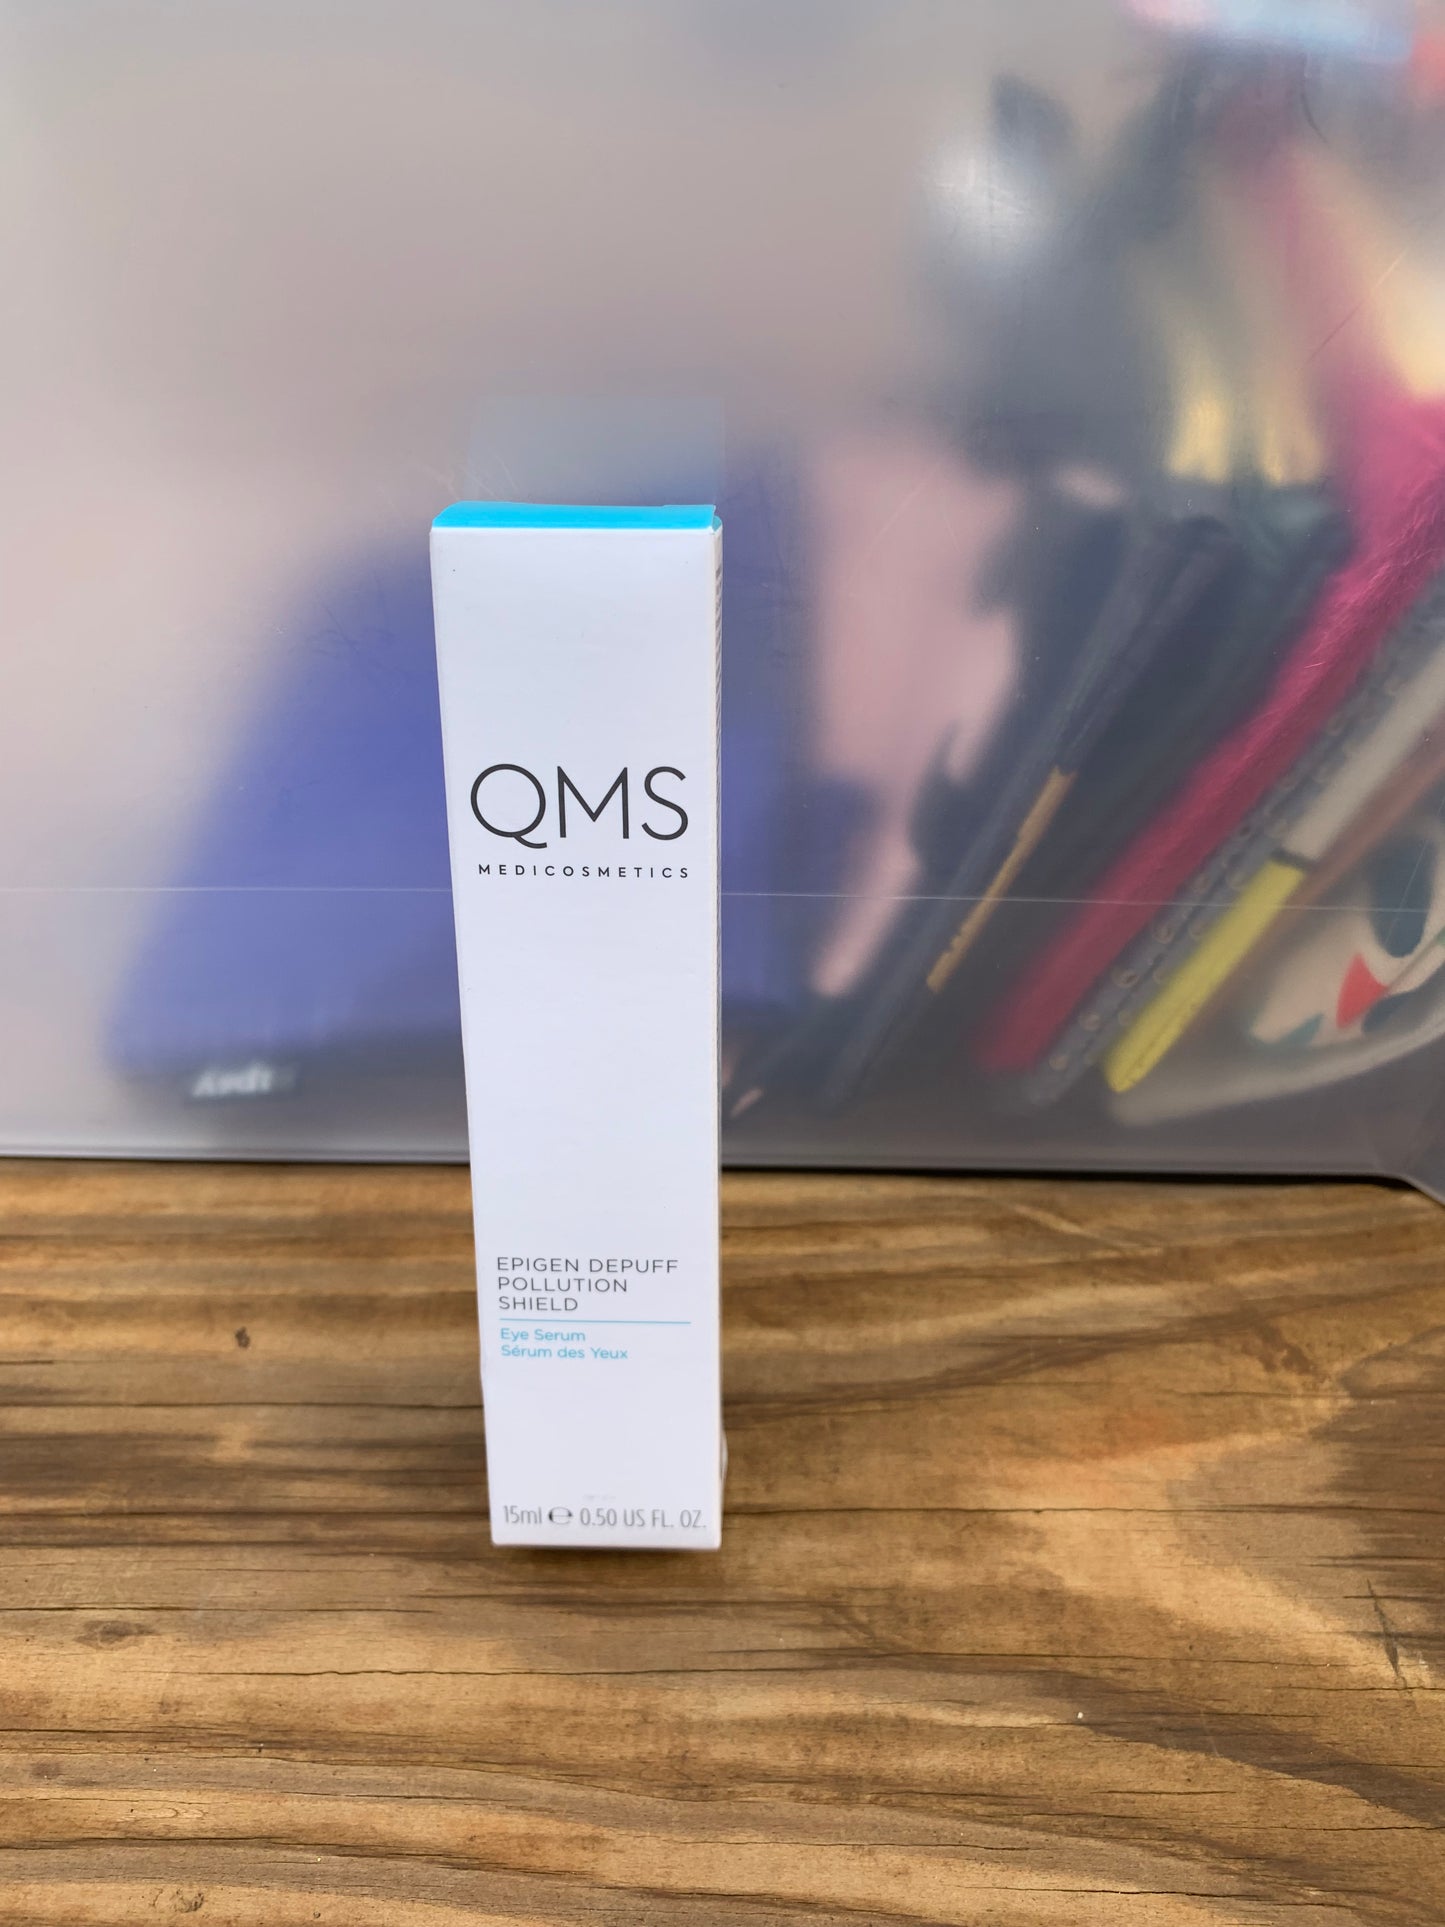 QMS MEDICOSMETICS Epigen Depuff Pollution Shield Eye Serum 15 ml